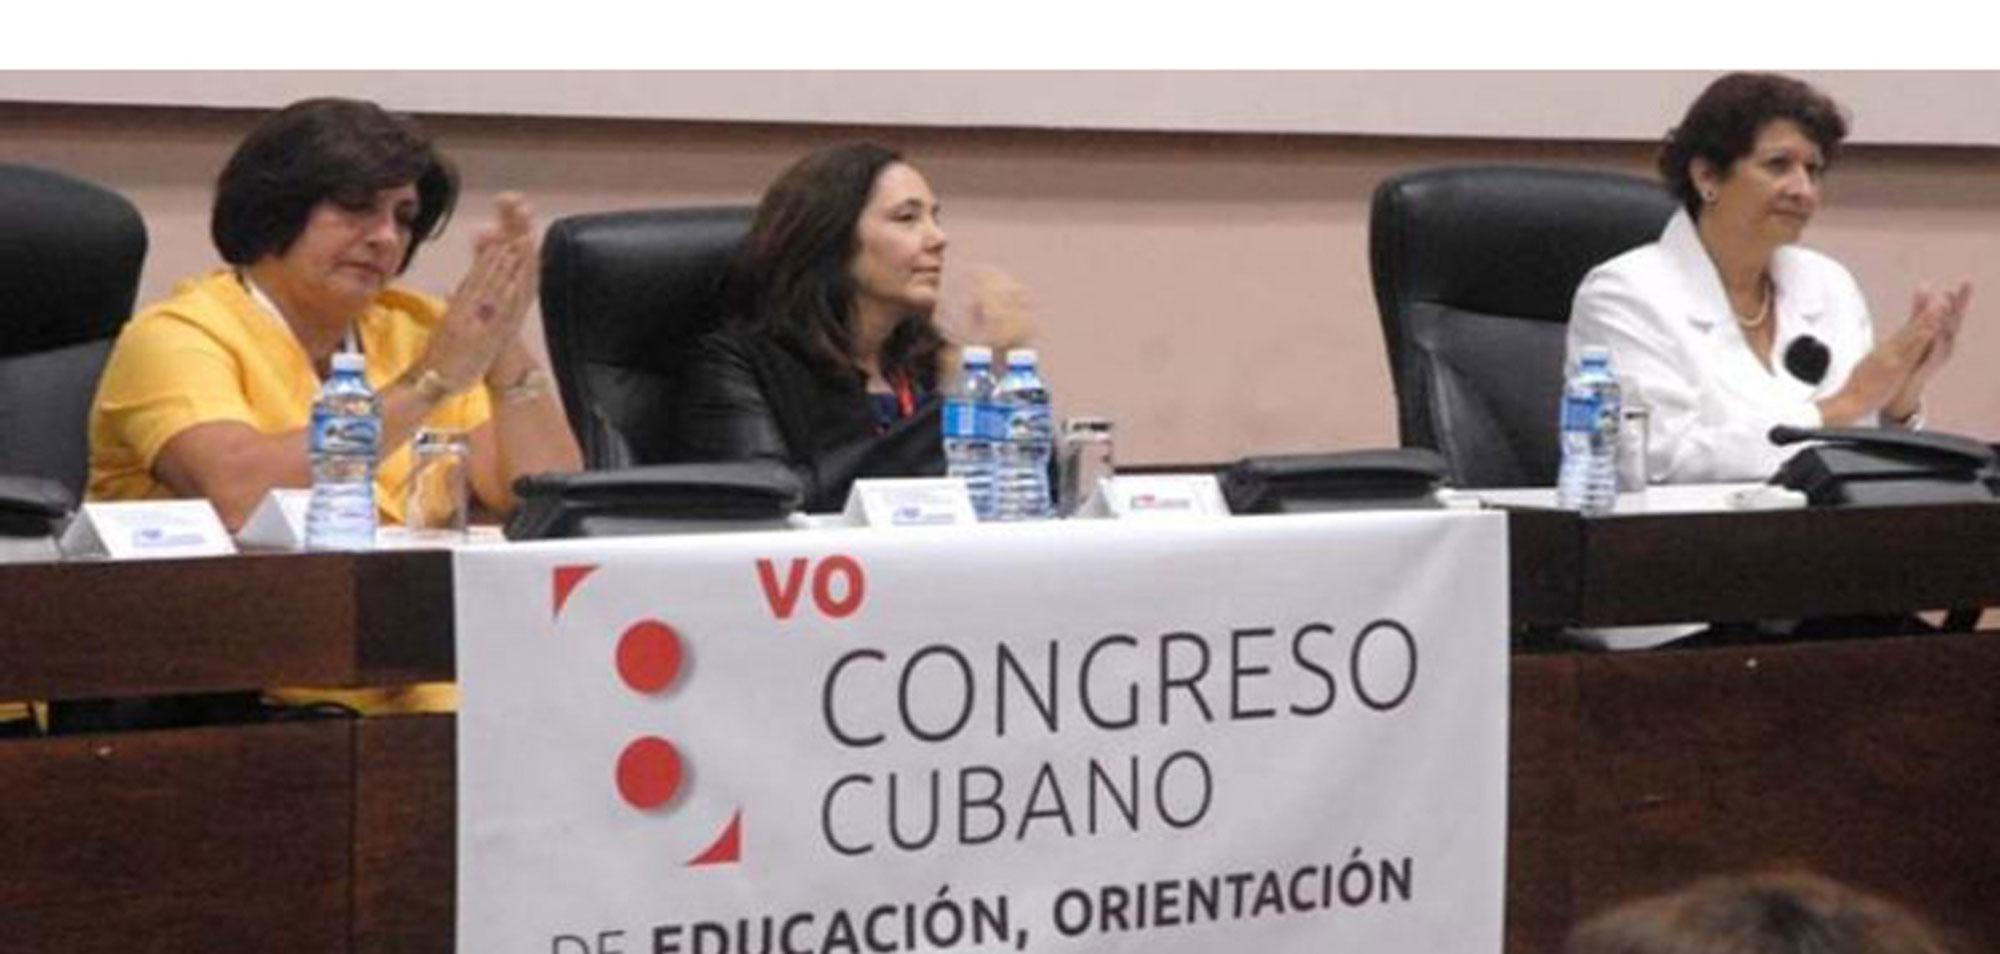 Sexual Education Congress Closes in Cuba